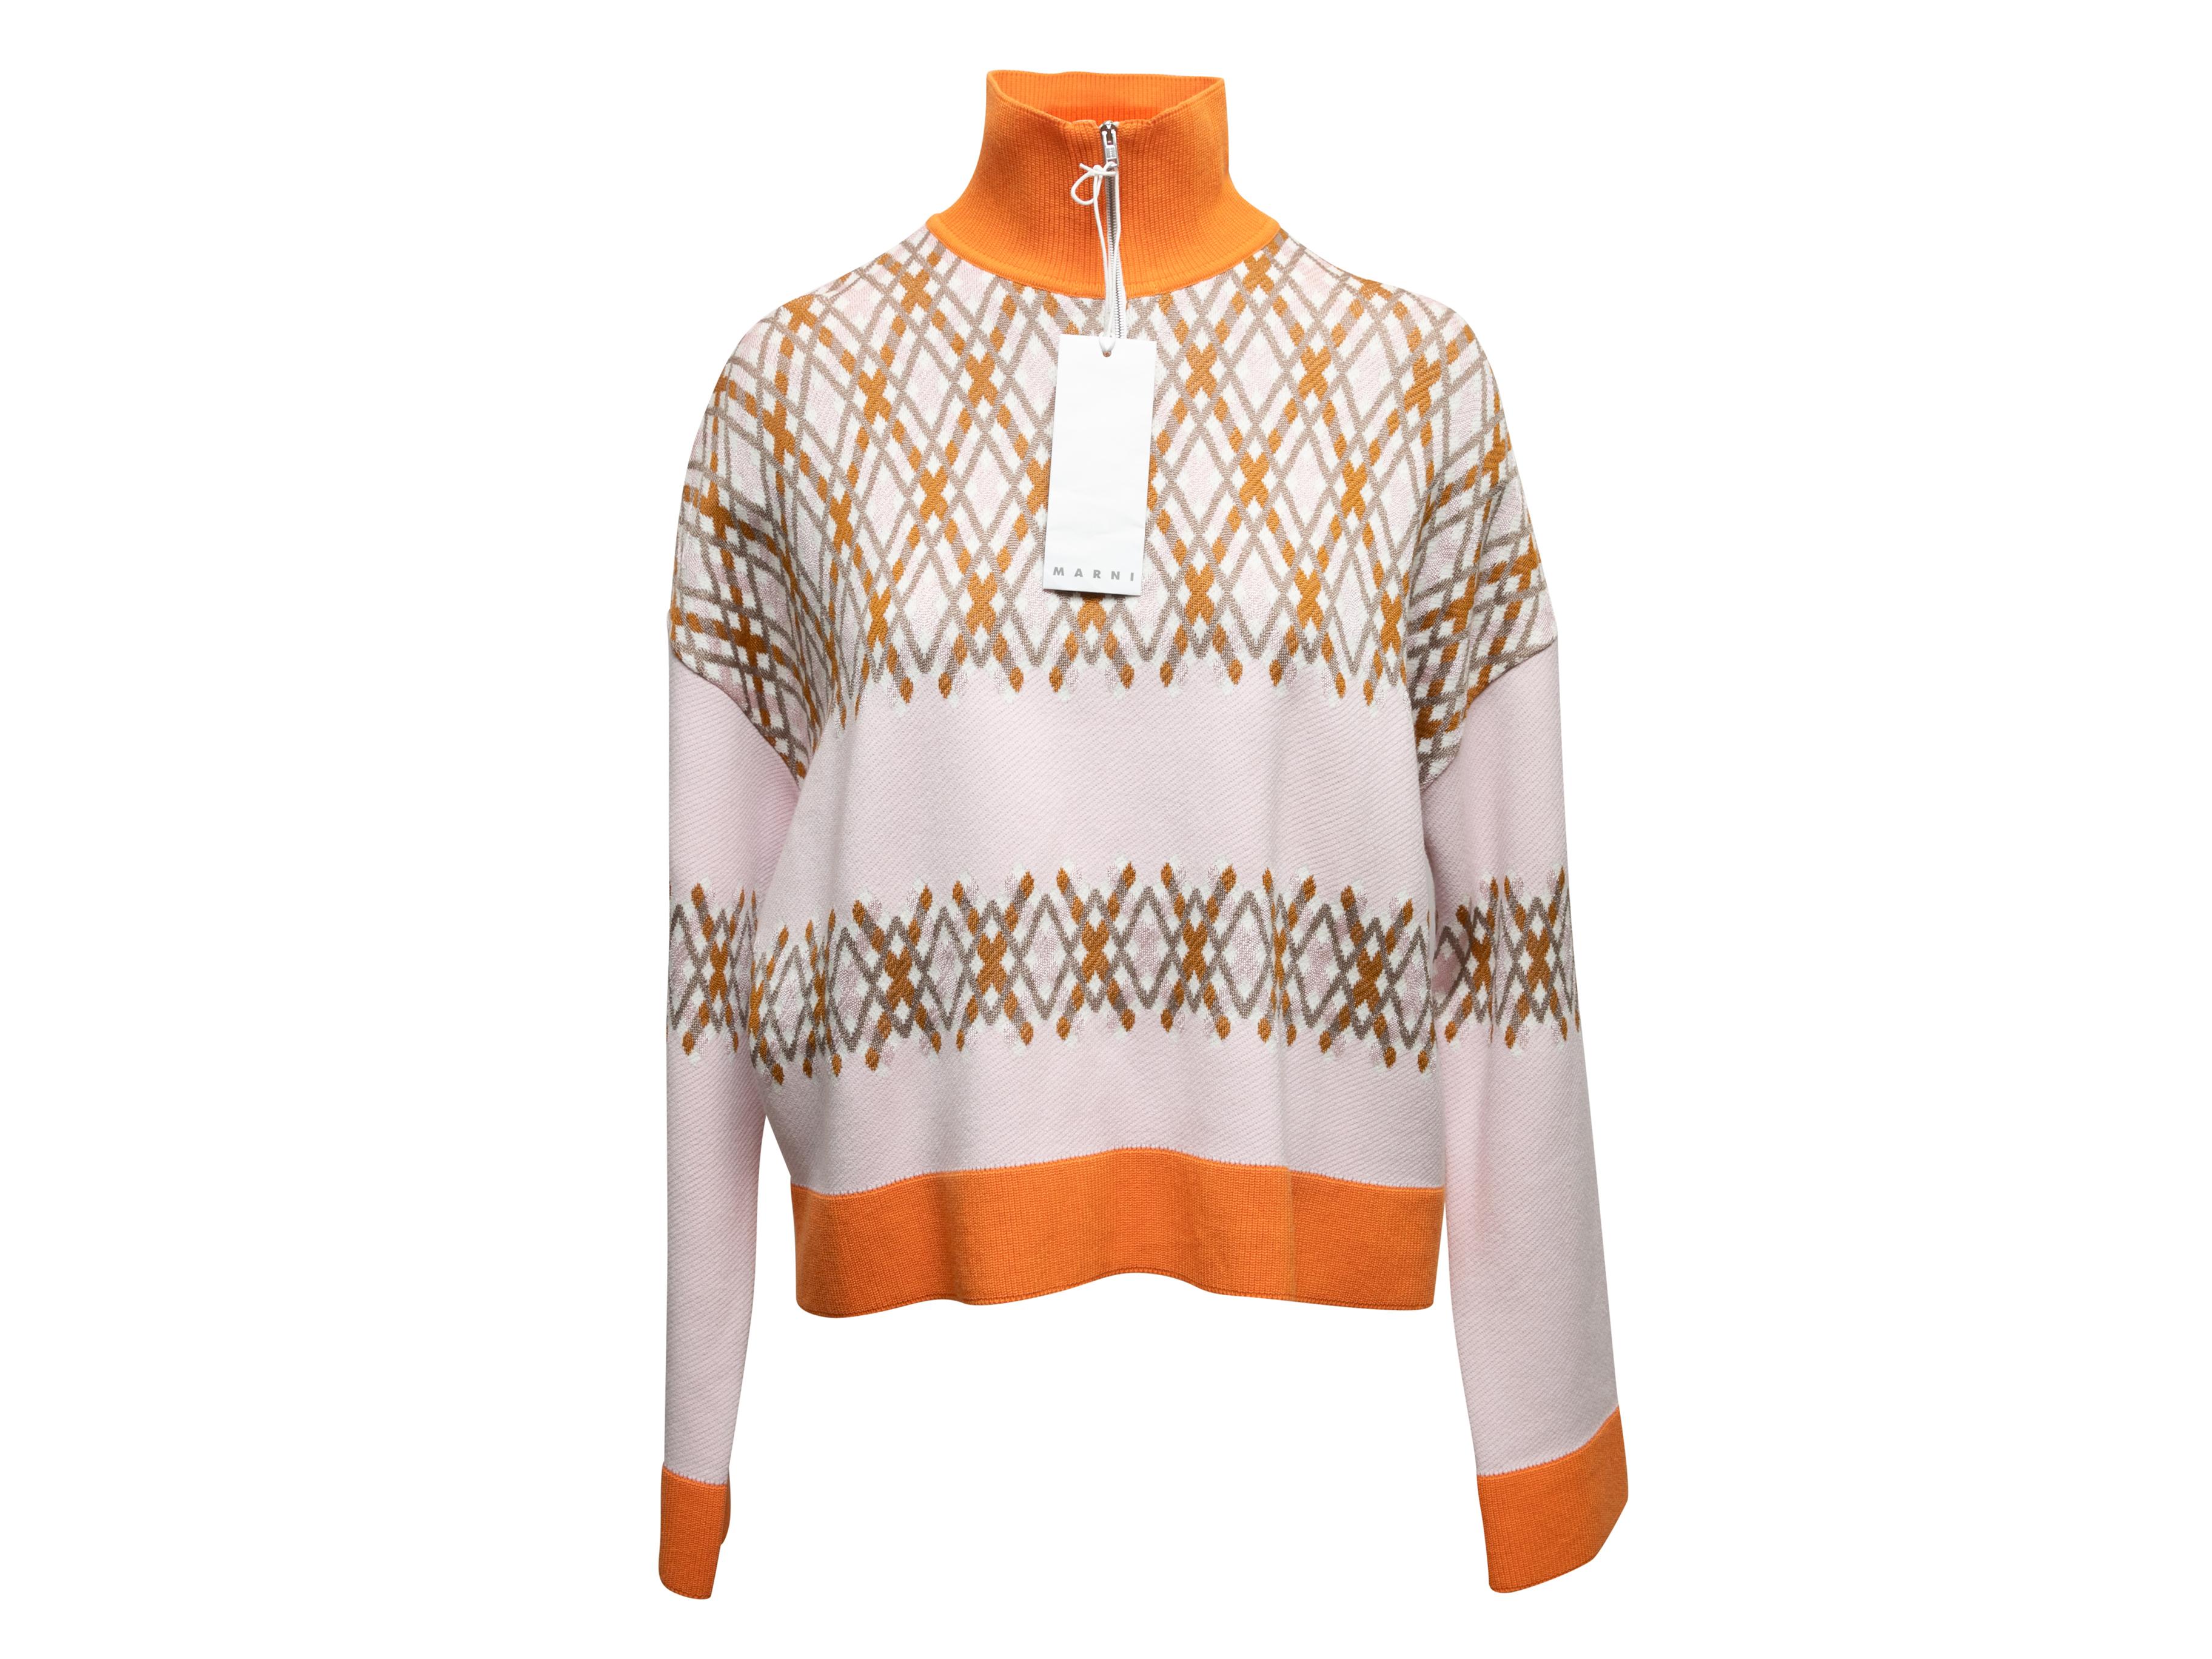 Light Pink & Orange Knit Half-Zip Sweater Size EU 44 For Sale 1